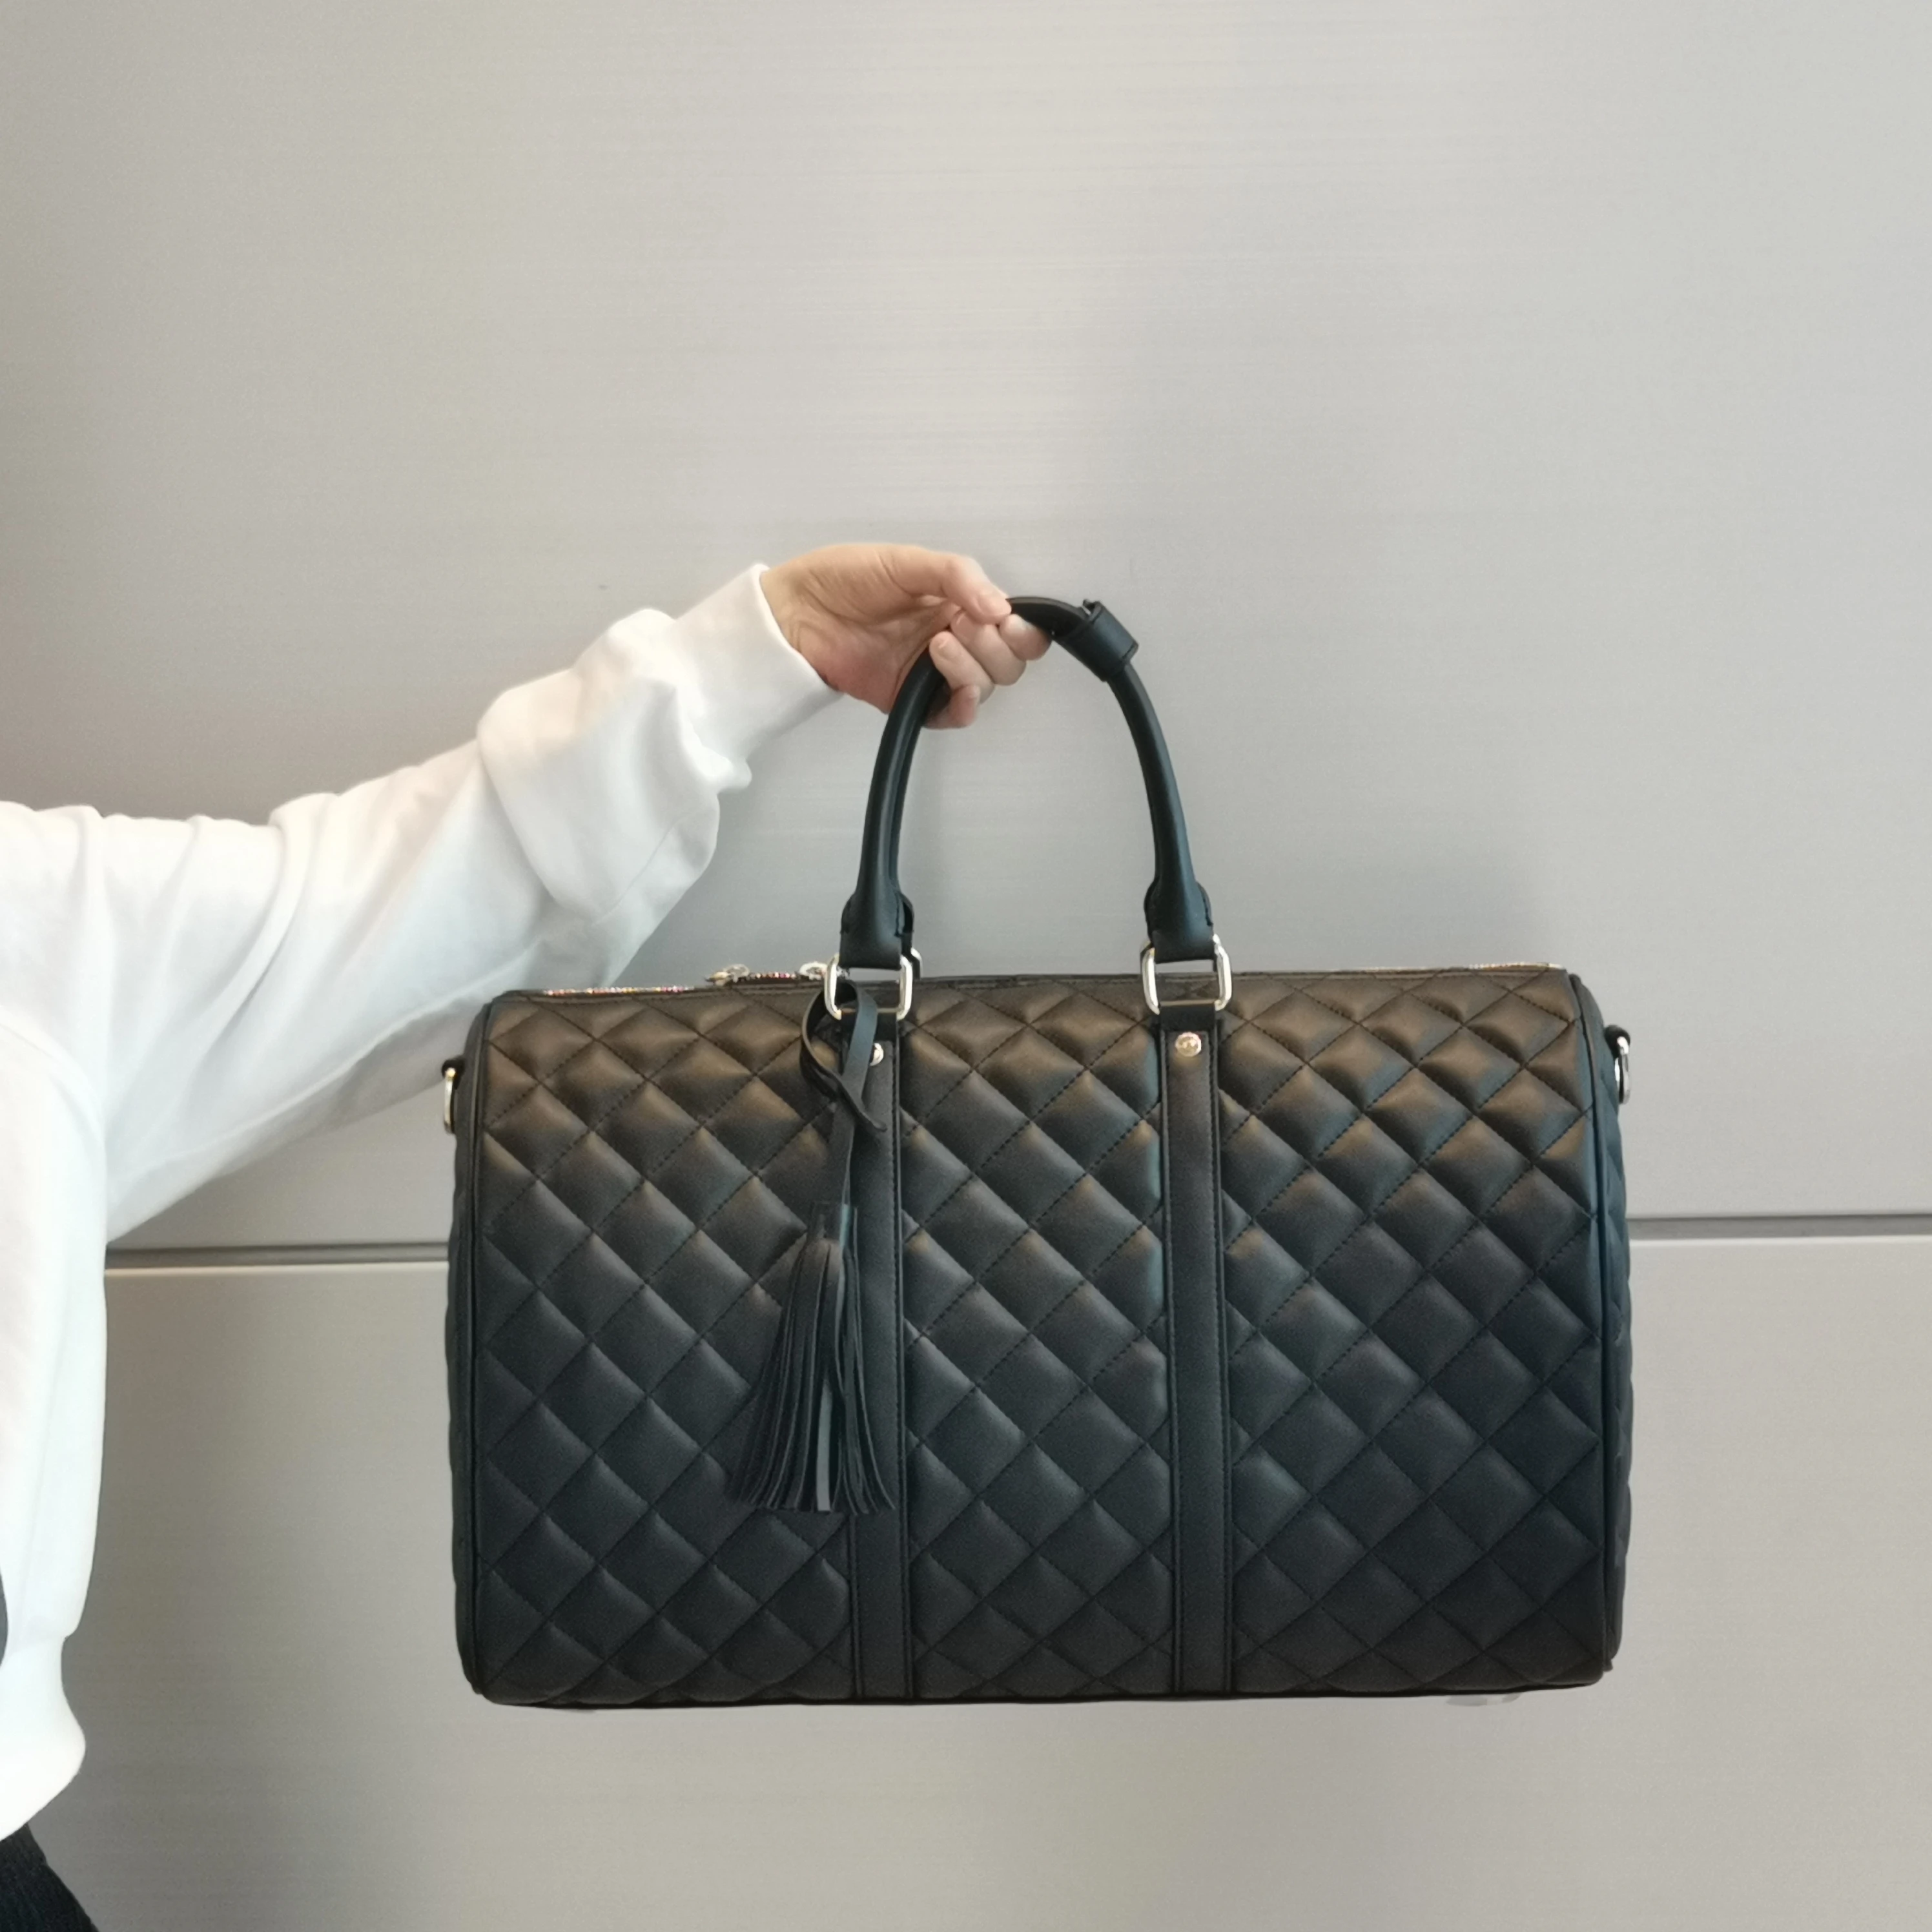 High Quality Customizable Leather Travelling bag Women Duffel Bag Waterproof Holdall Weekend Travel Bag